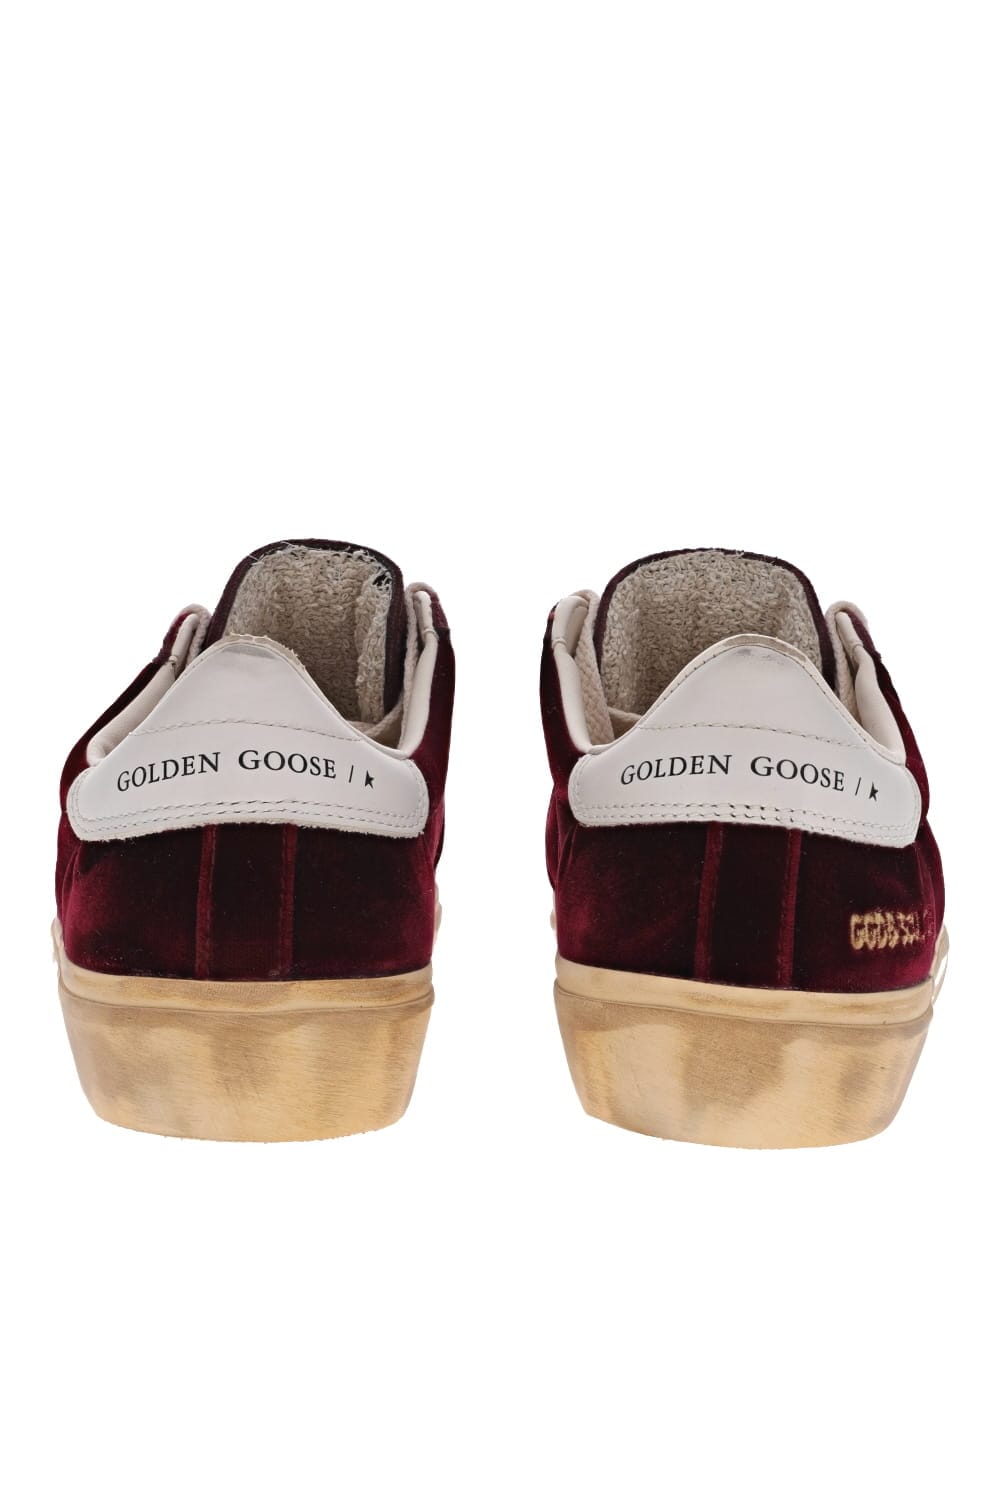 Golden Goose SOUL-STAR VELVET UPPER BIO BASED HF TONGUE LEATHER HEEL GWF00464.F005055.40471 BORDEAUX/MILK